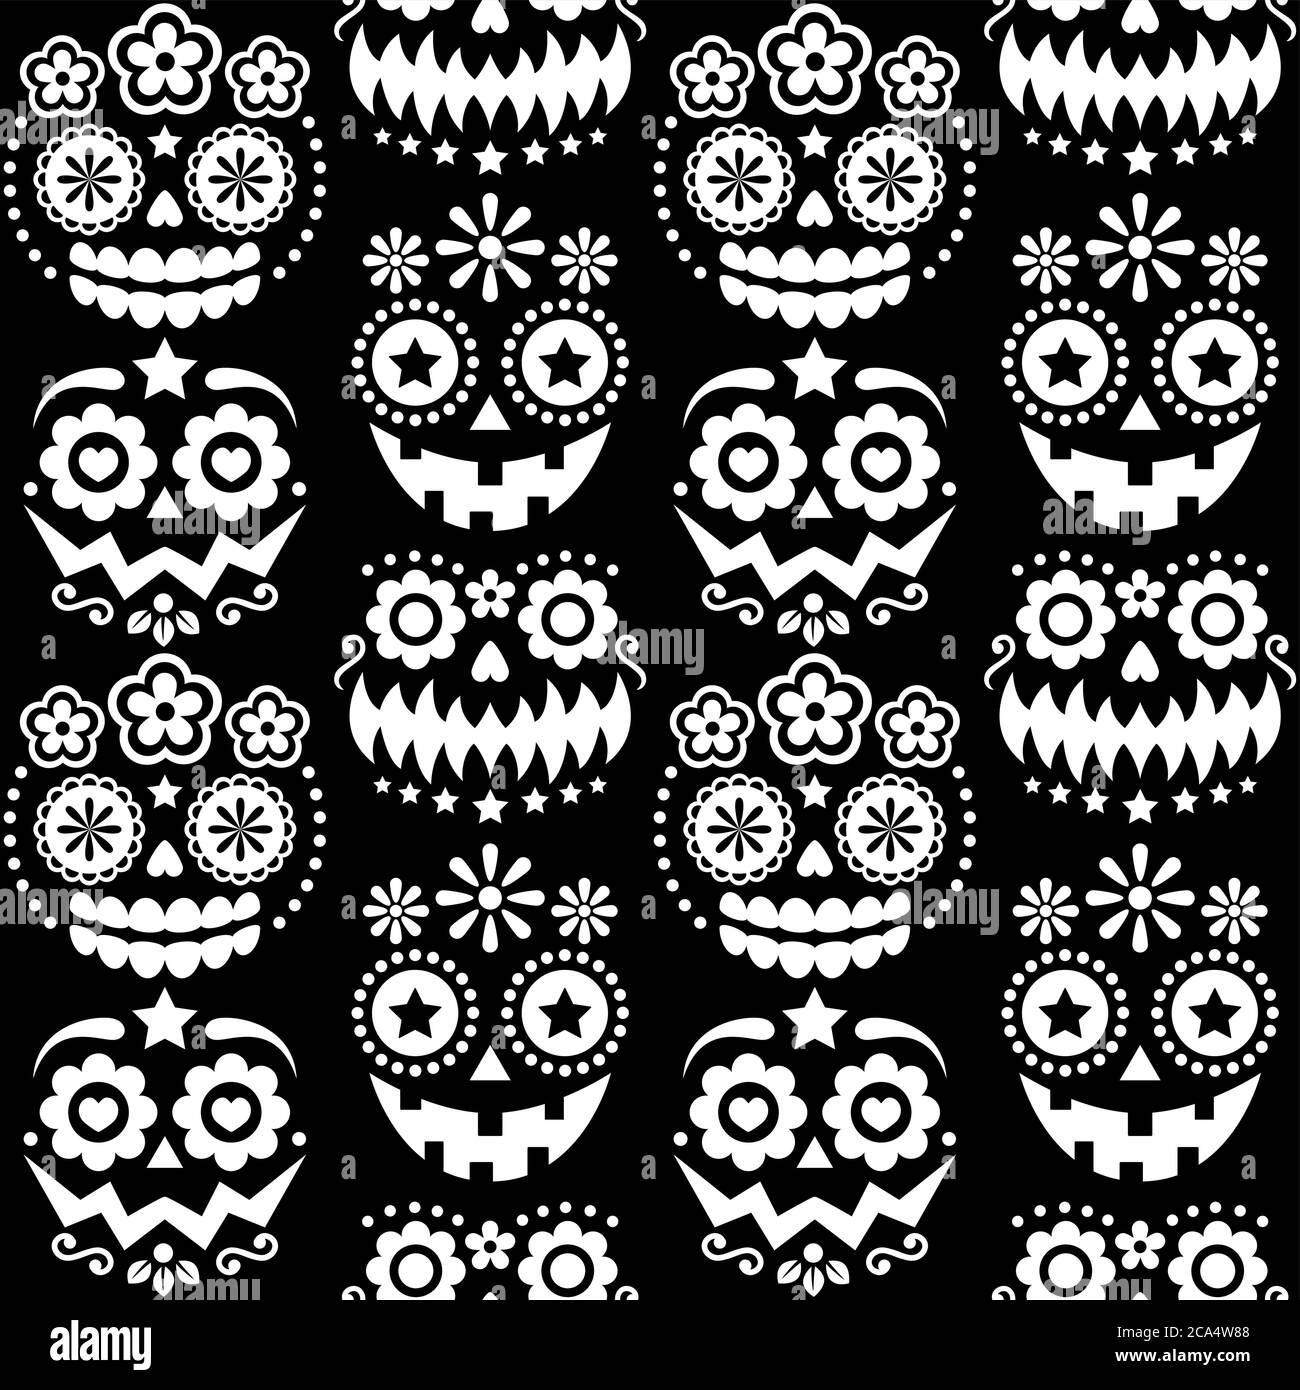 Halloween and Dia de los Muertos skulls and pumpkin faces vector seamless pattern - Mexican sugar skull style monochrome texile design Stock Vector